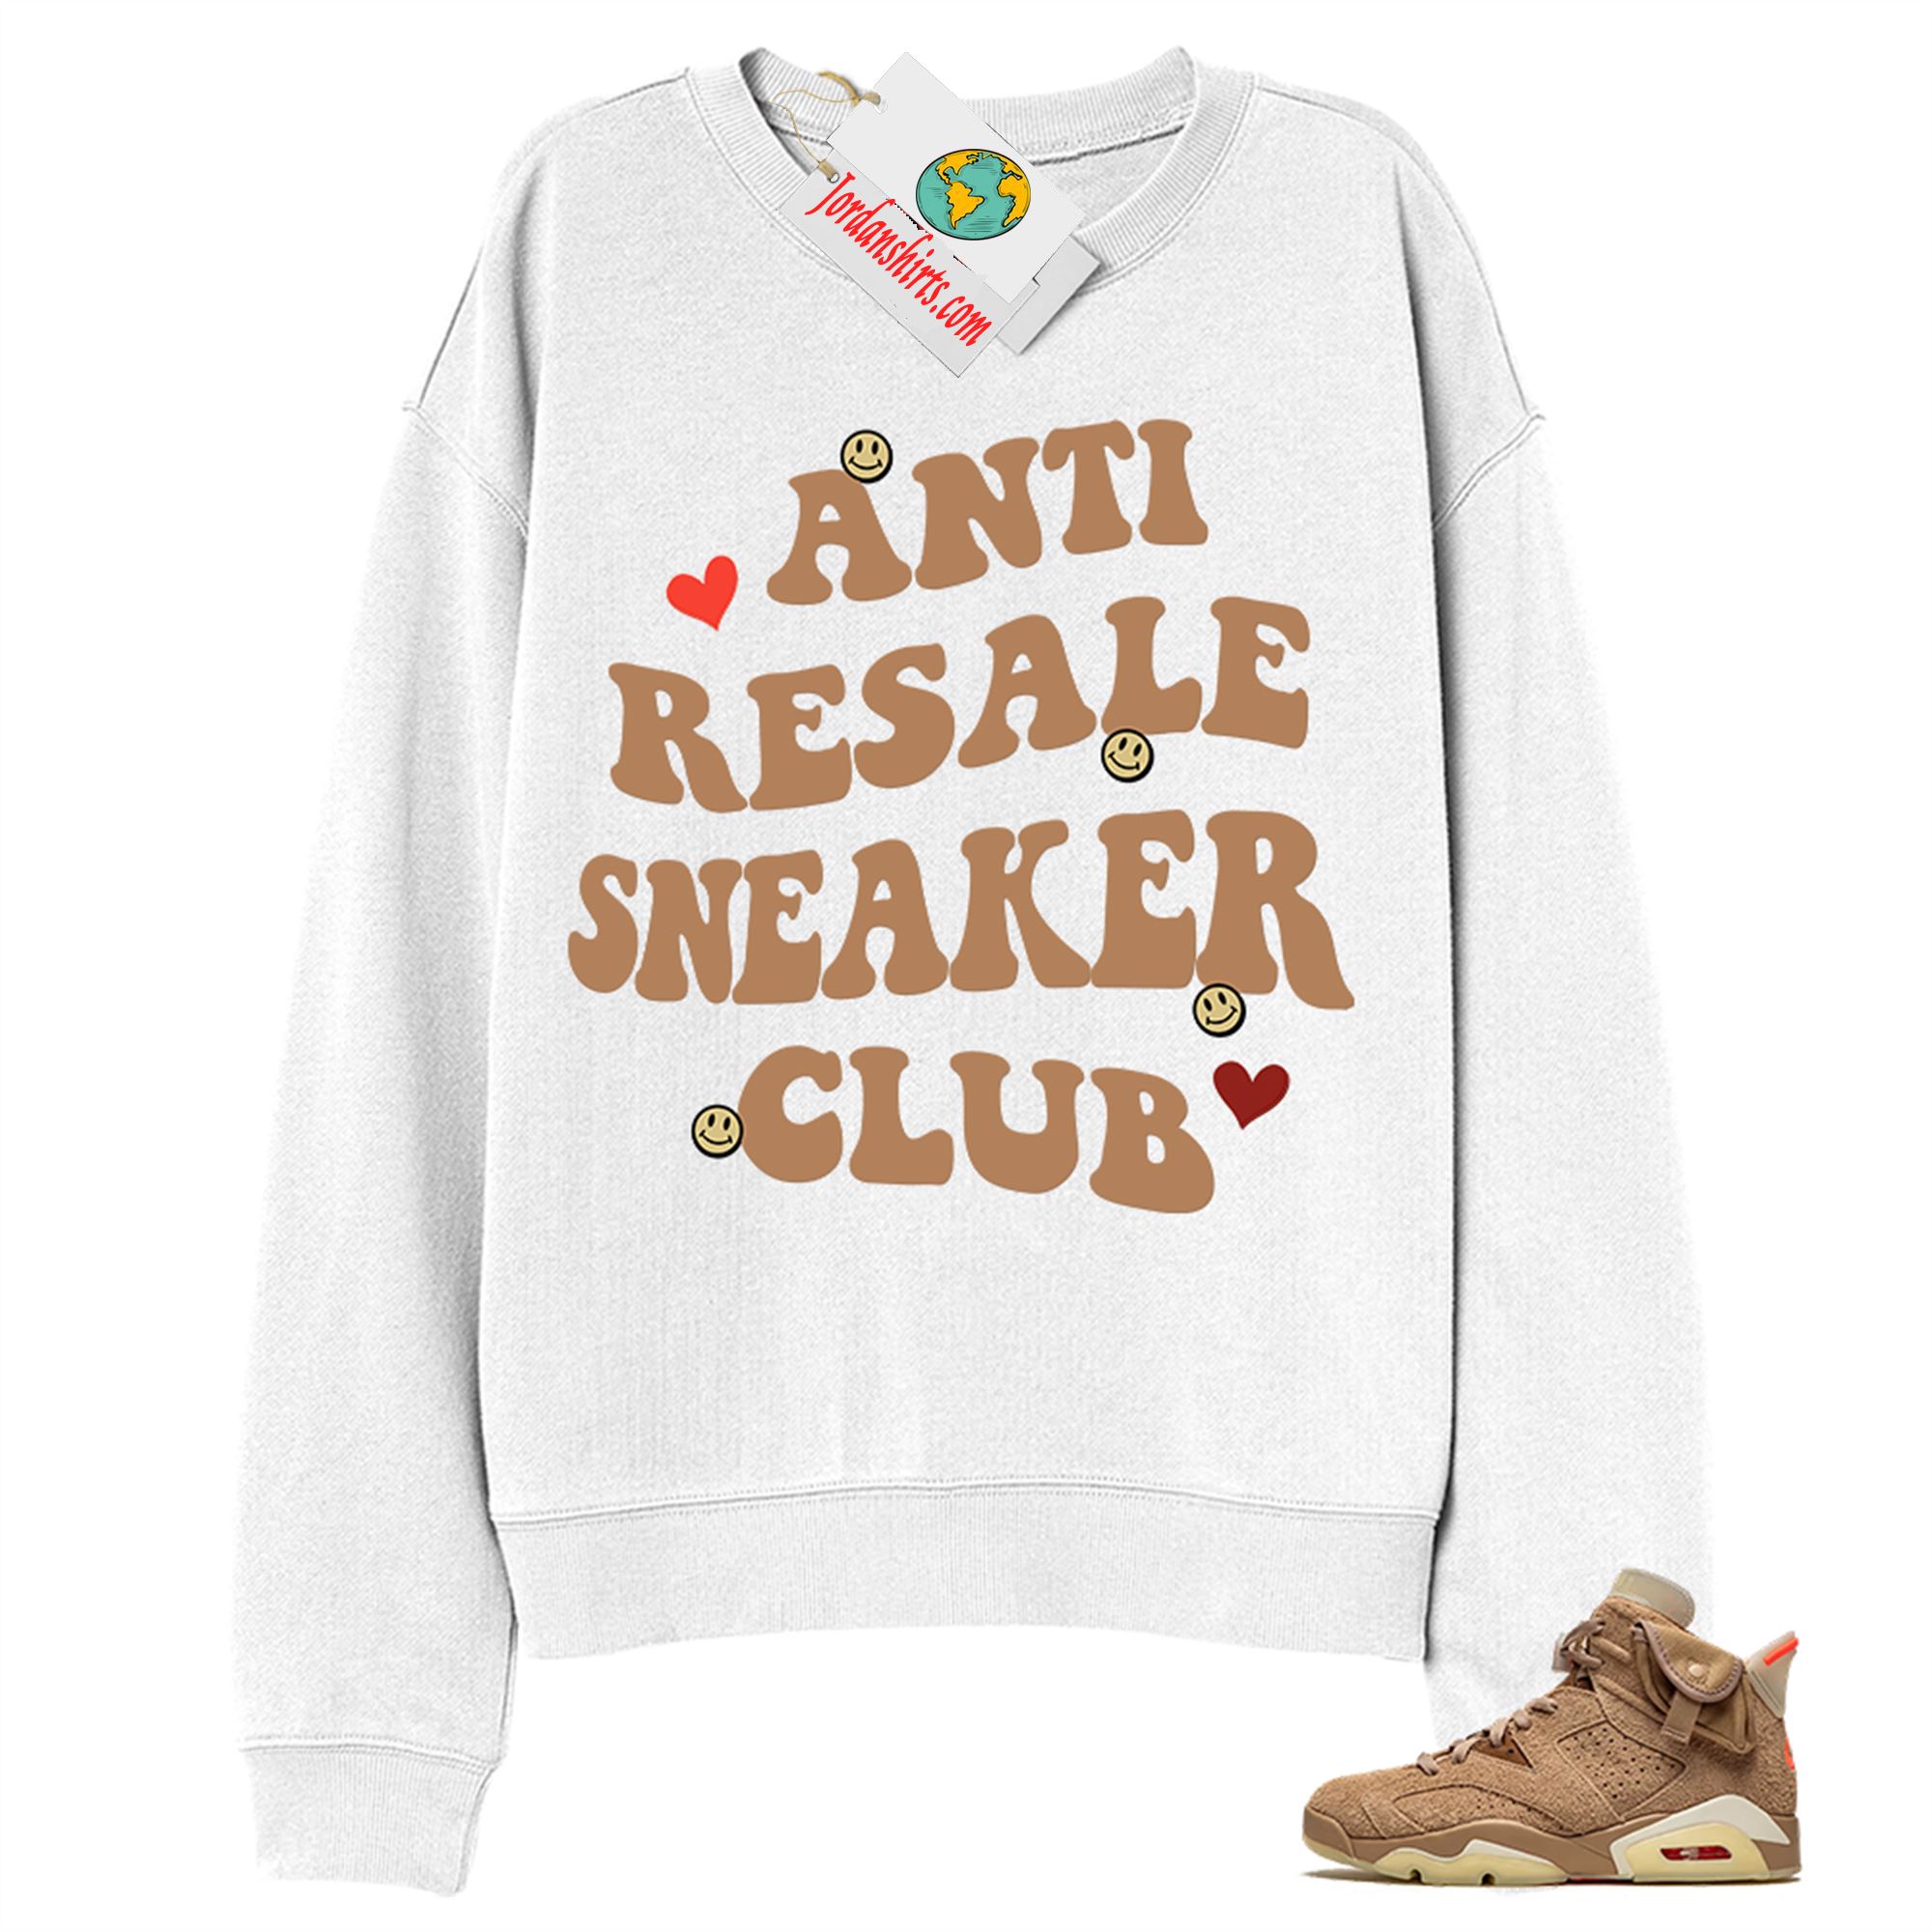 Jordan 6 Sweatshirt, Anti Resale Sneaker Club White Sweatshirt Air Jordan 6 Travis Scott 6s Full Size Up To 5xl